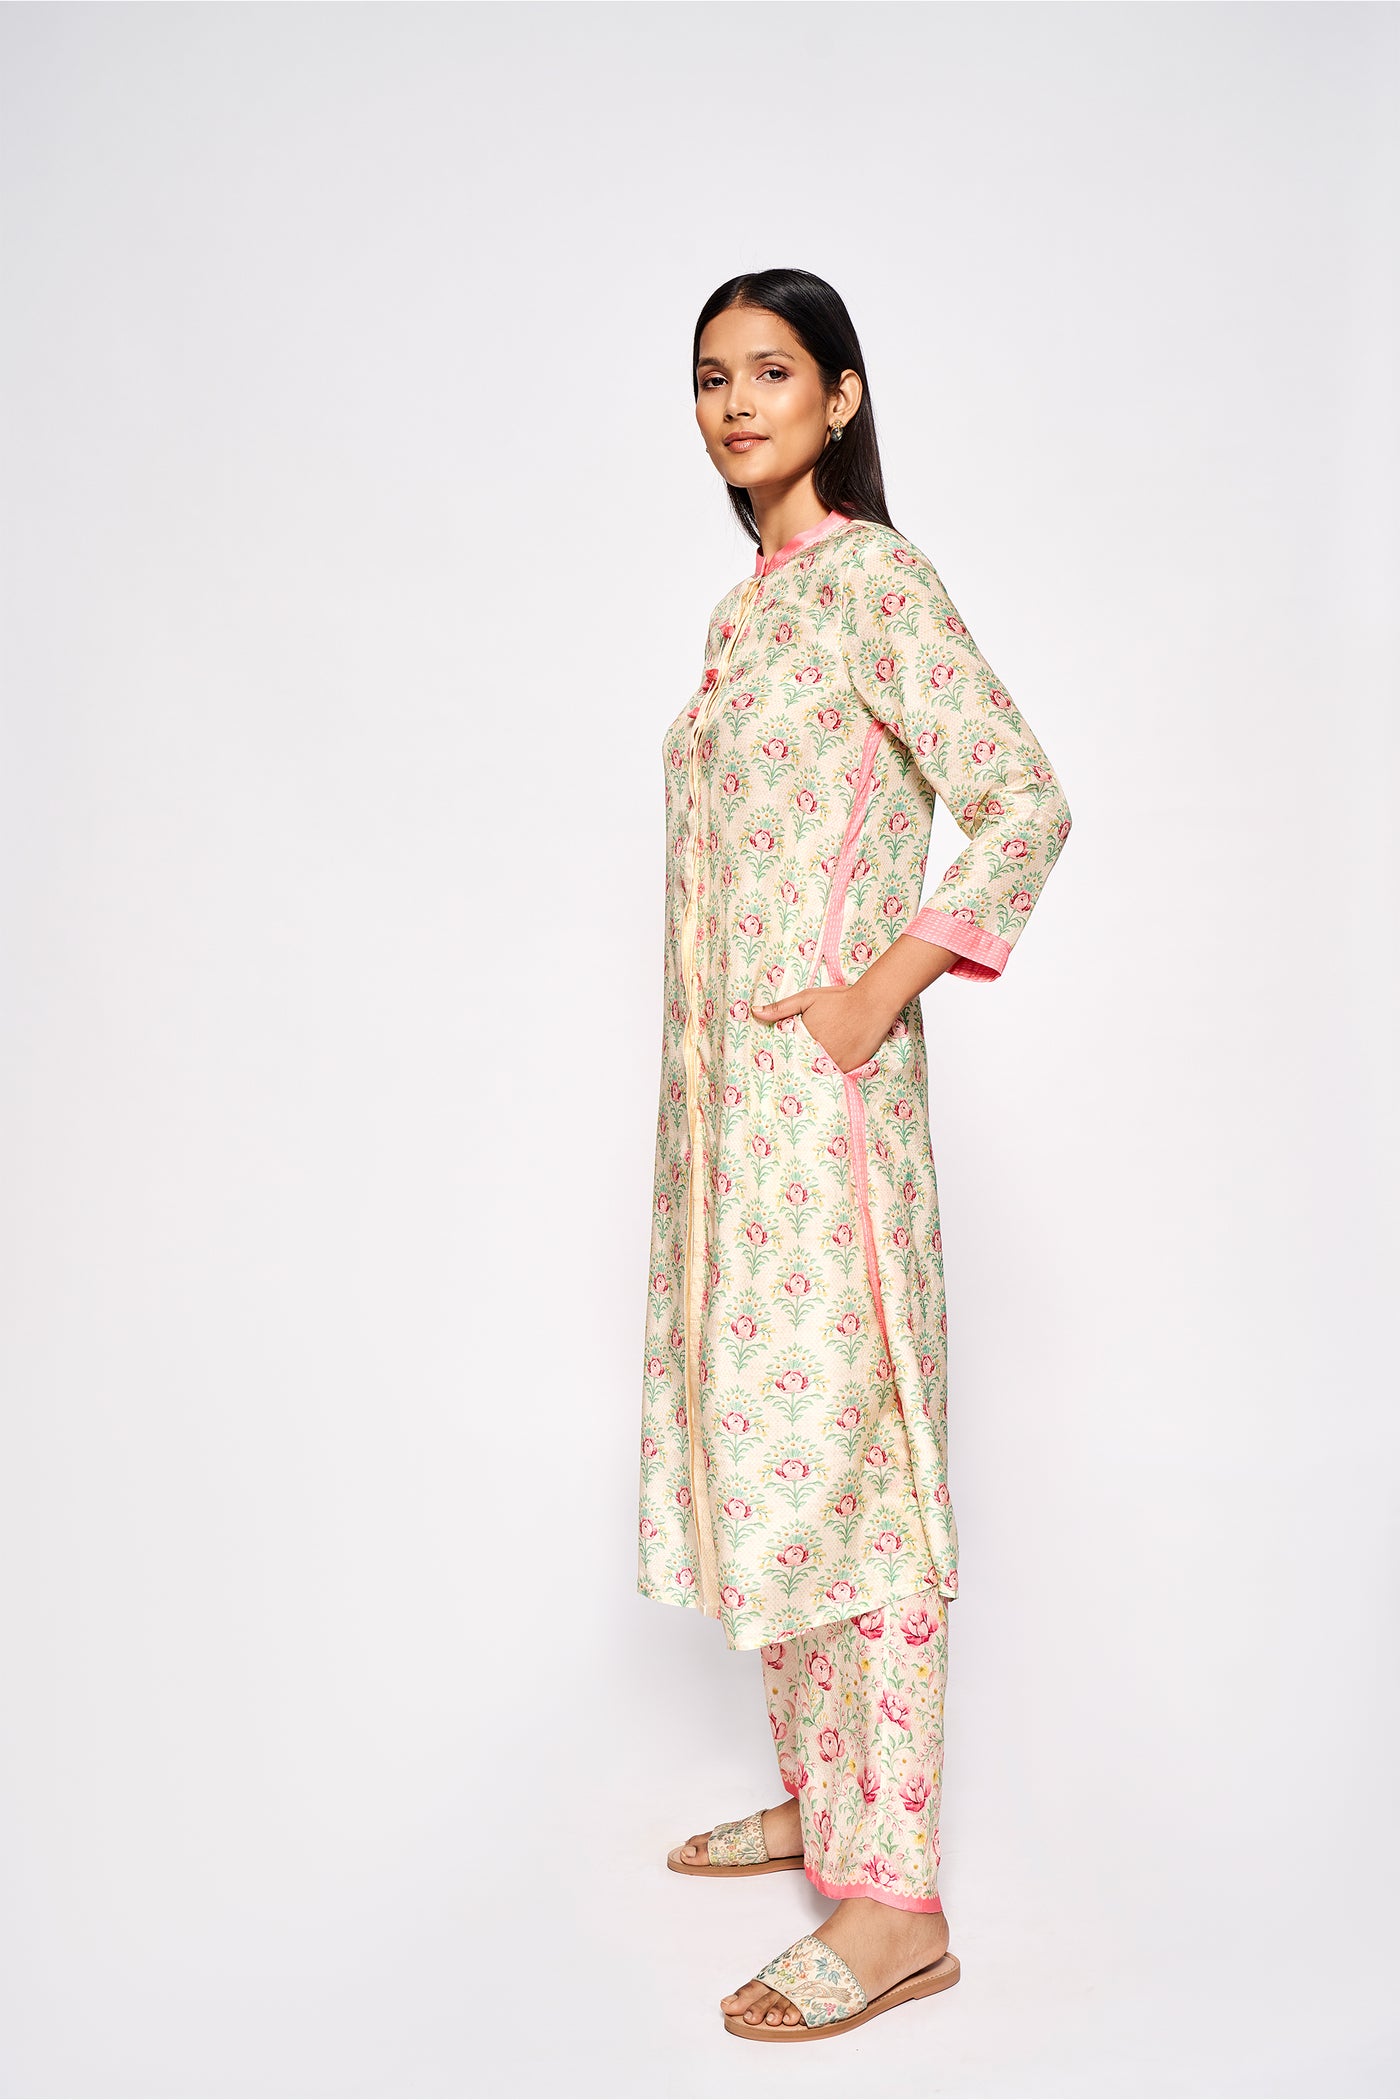 Anita Dongre Bamini Set Natural festive indian designer wear online shopping melange singapore